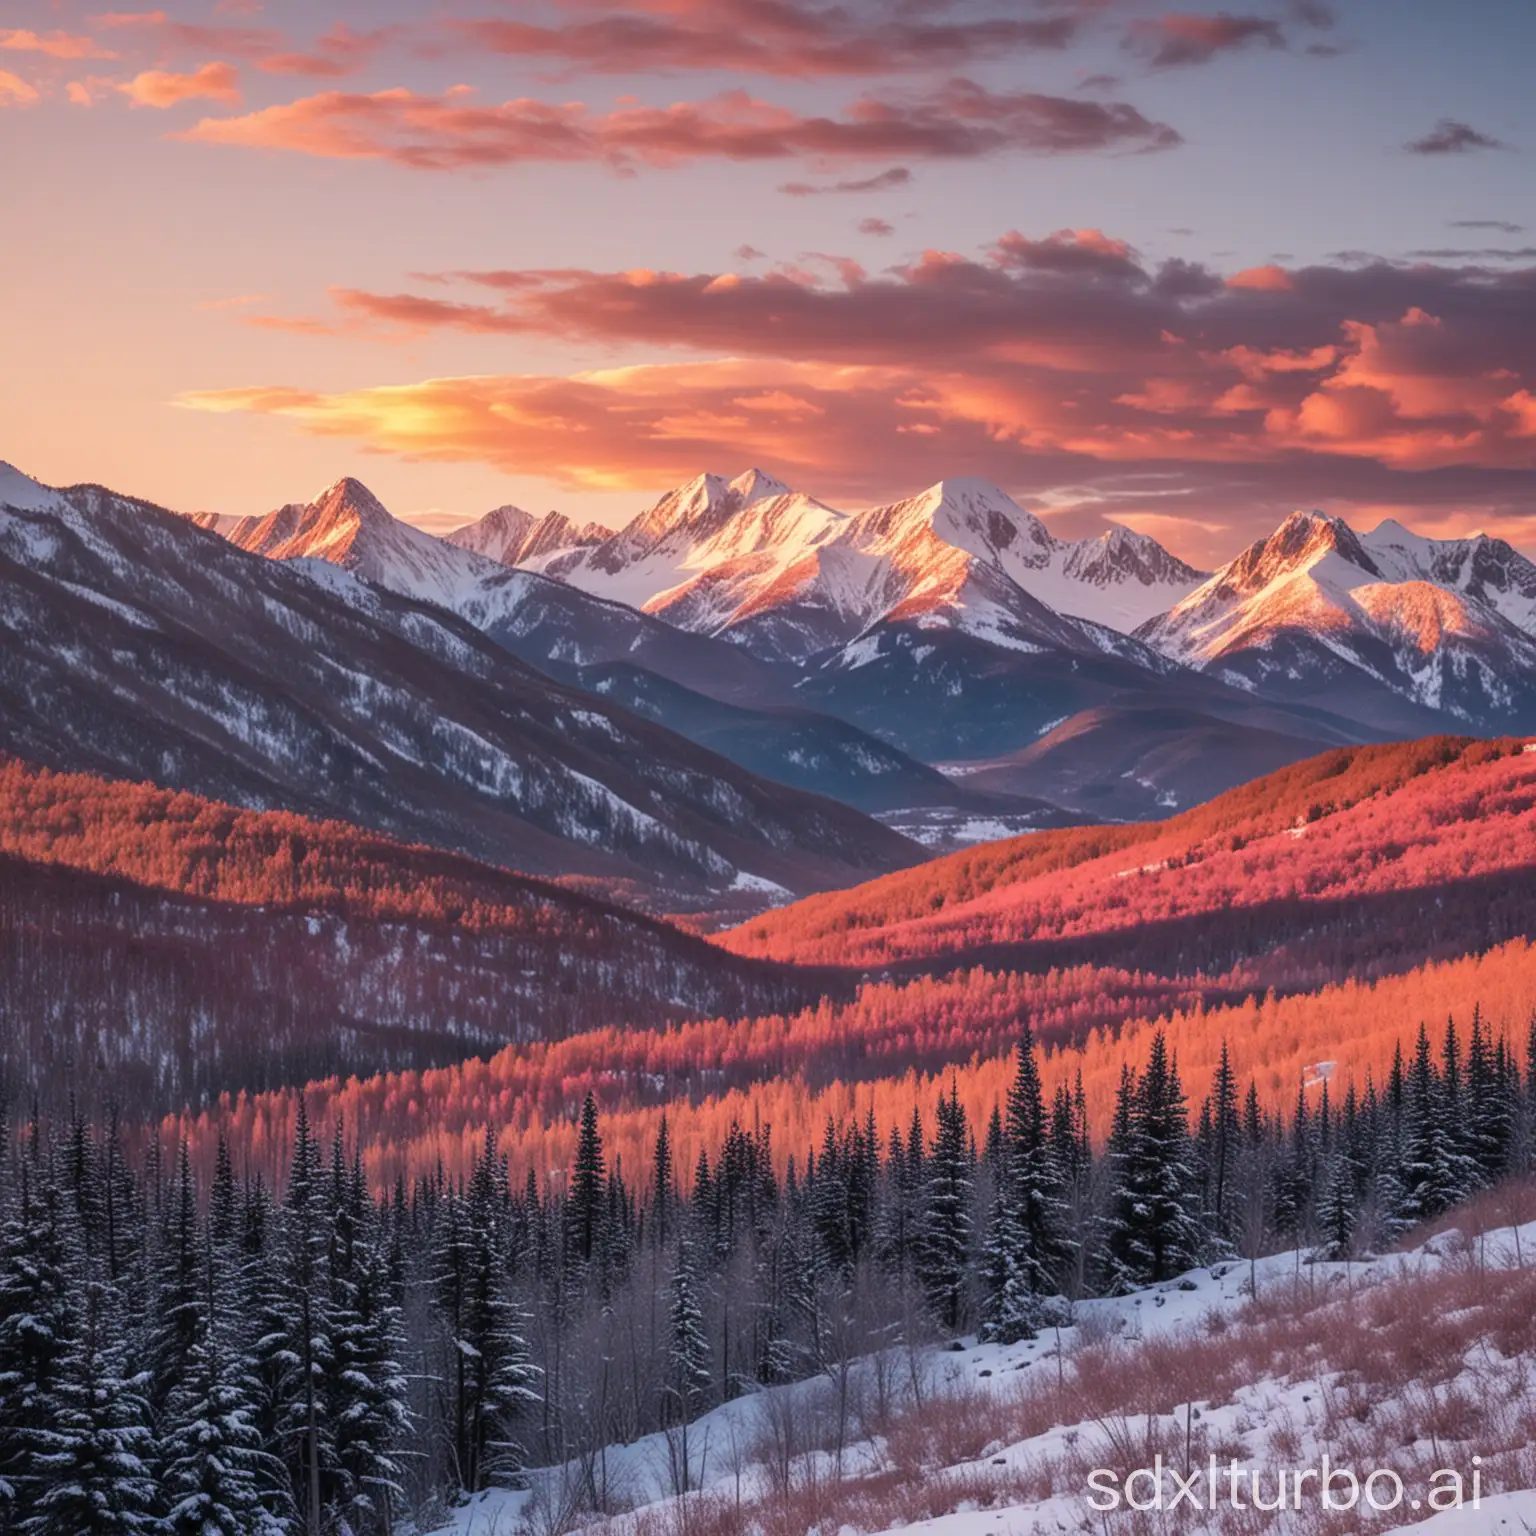 Majestic-Sunset-Painting-Snowy-Mountain-Range-Landscape